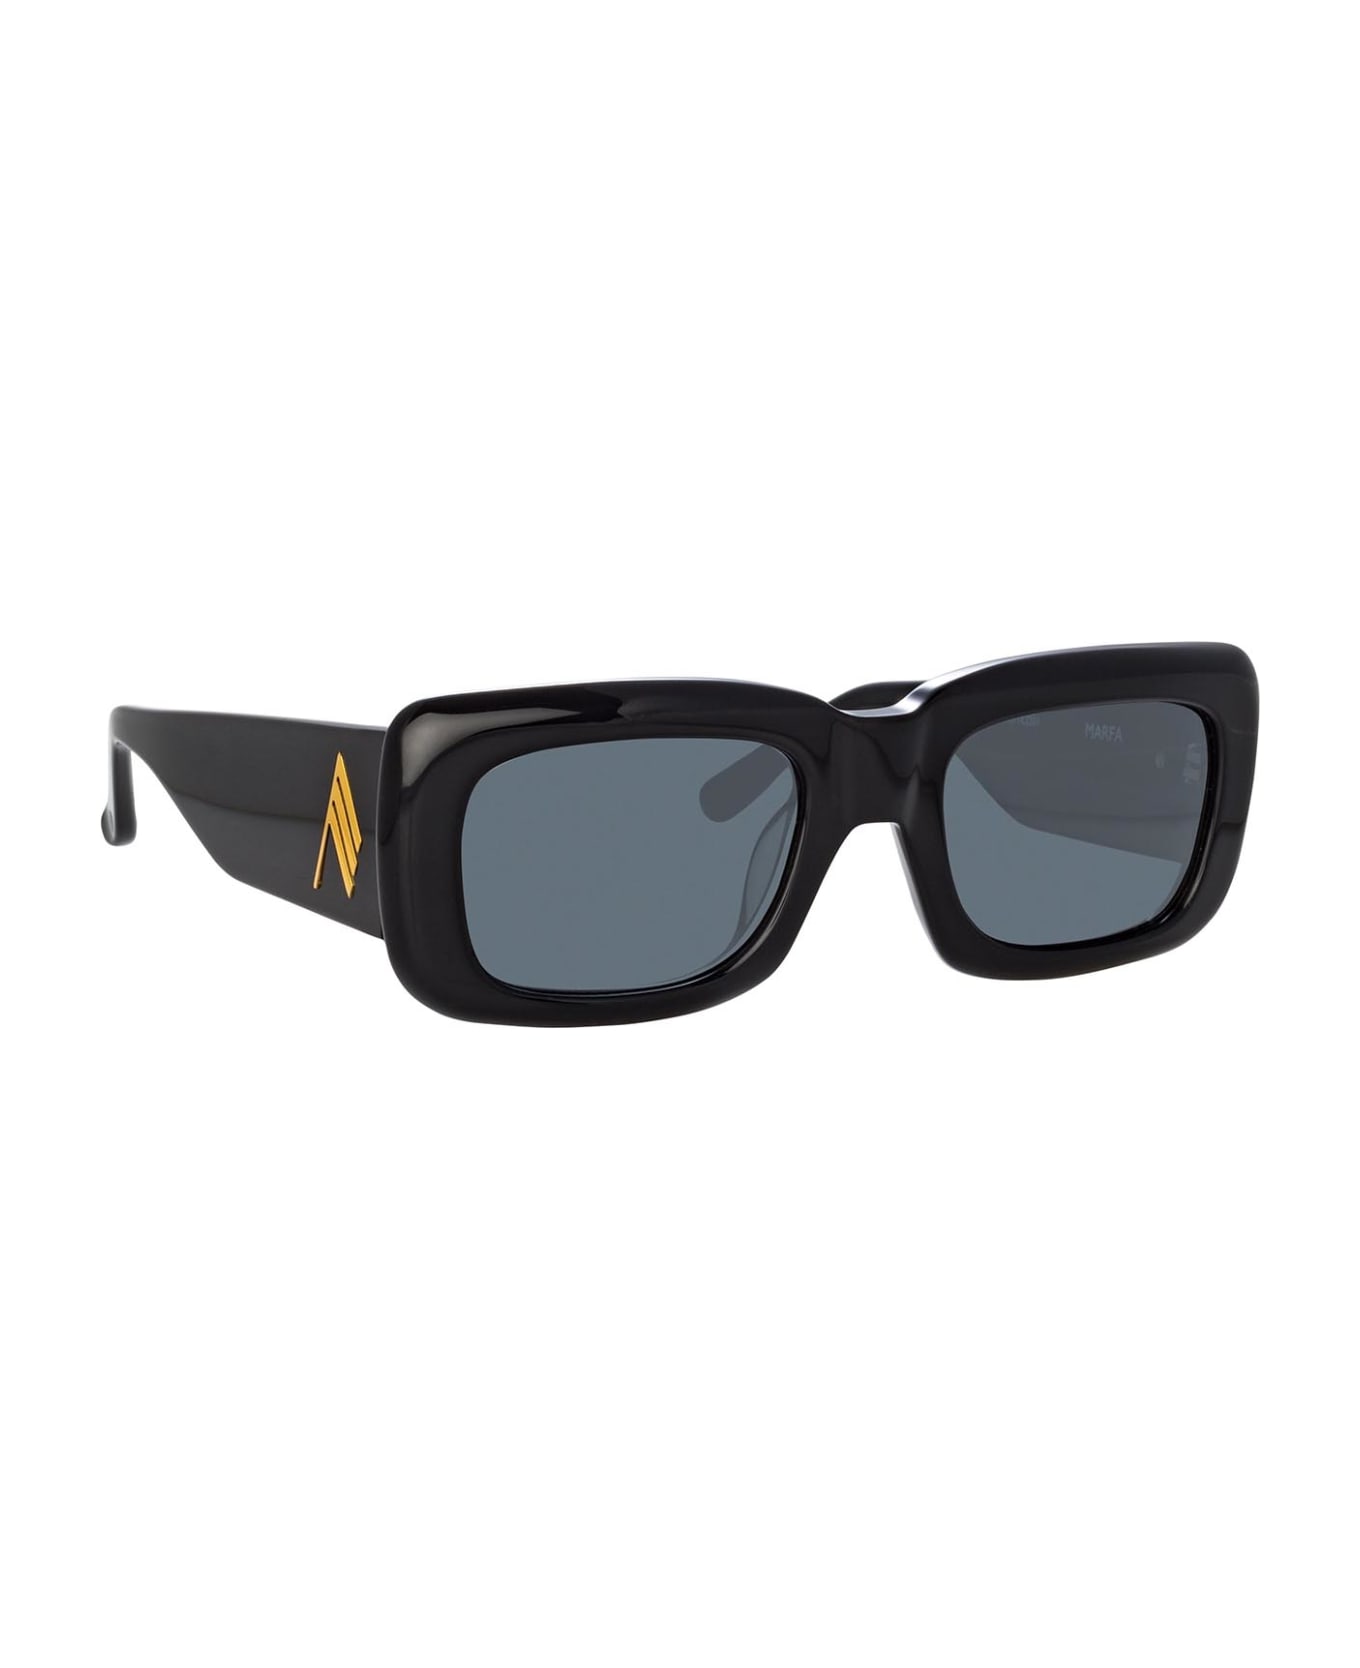 Linda Farrow Attico3 Black / Yellow Gold Sunglasses - Black / Yellow Gold